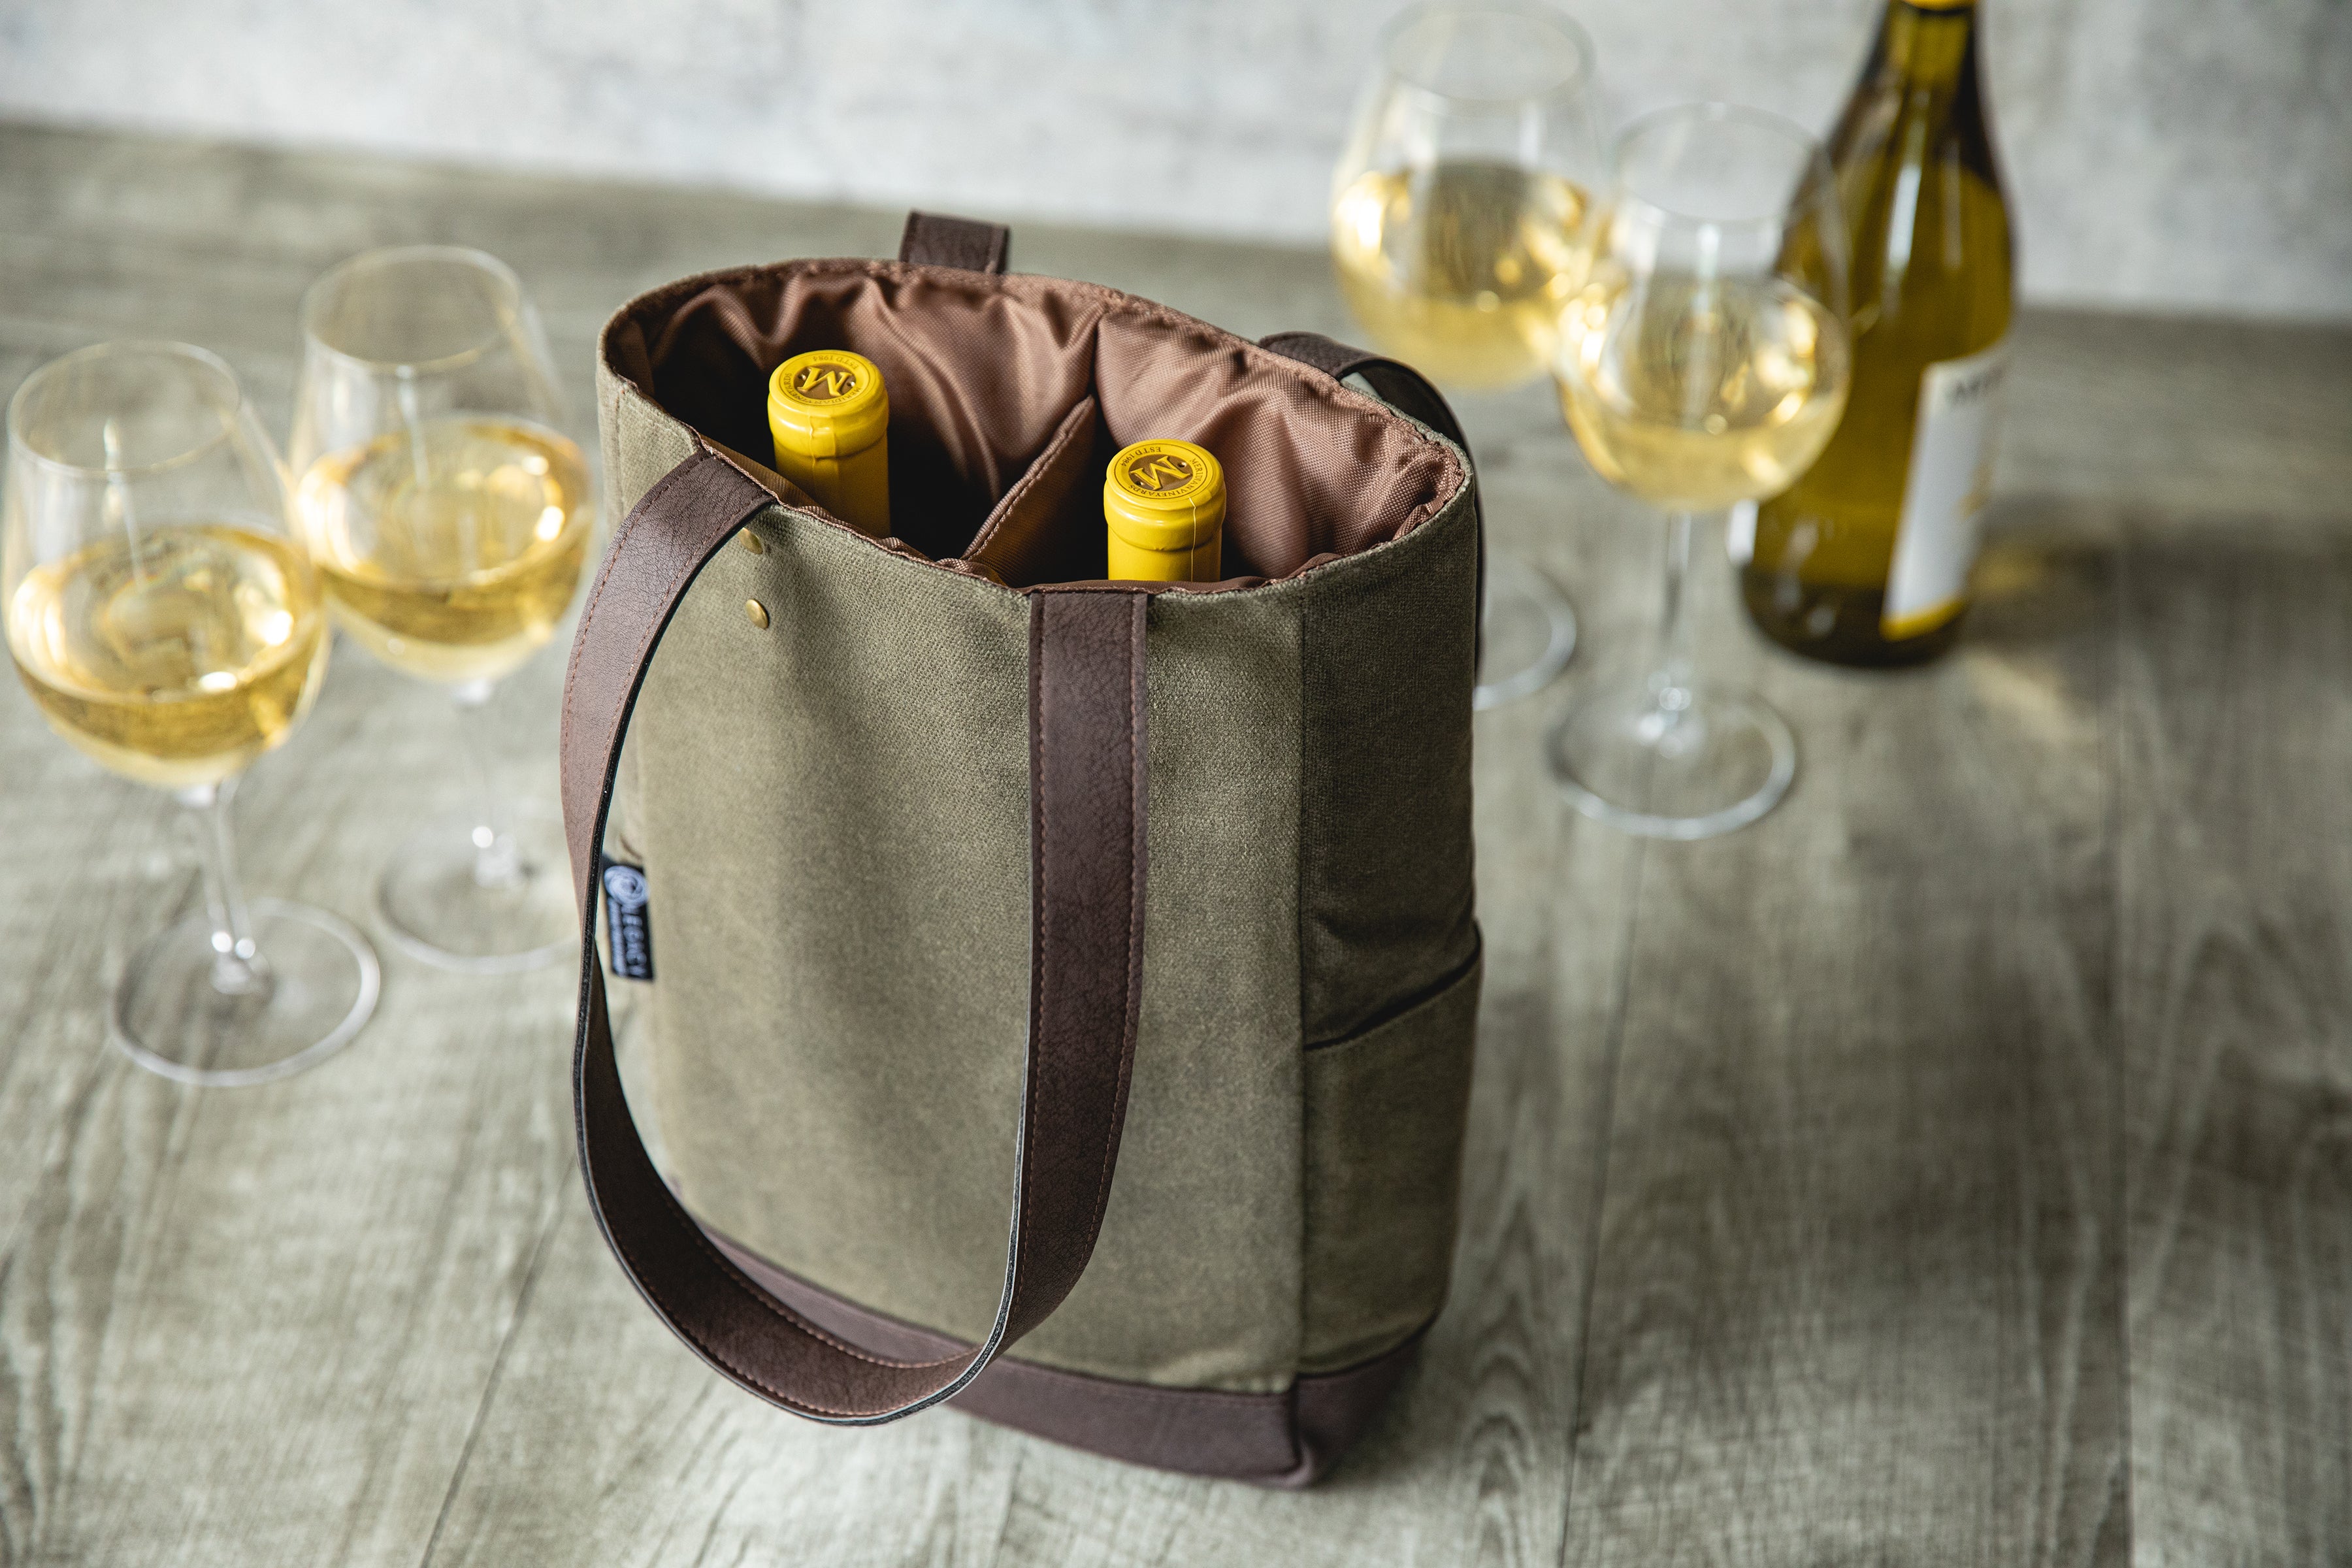 Cincinnati Reds - 2 Bottle Insulated Wine Cooler Bag